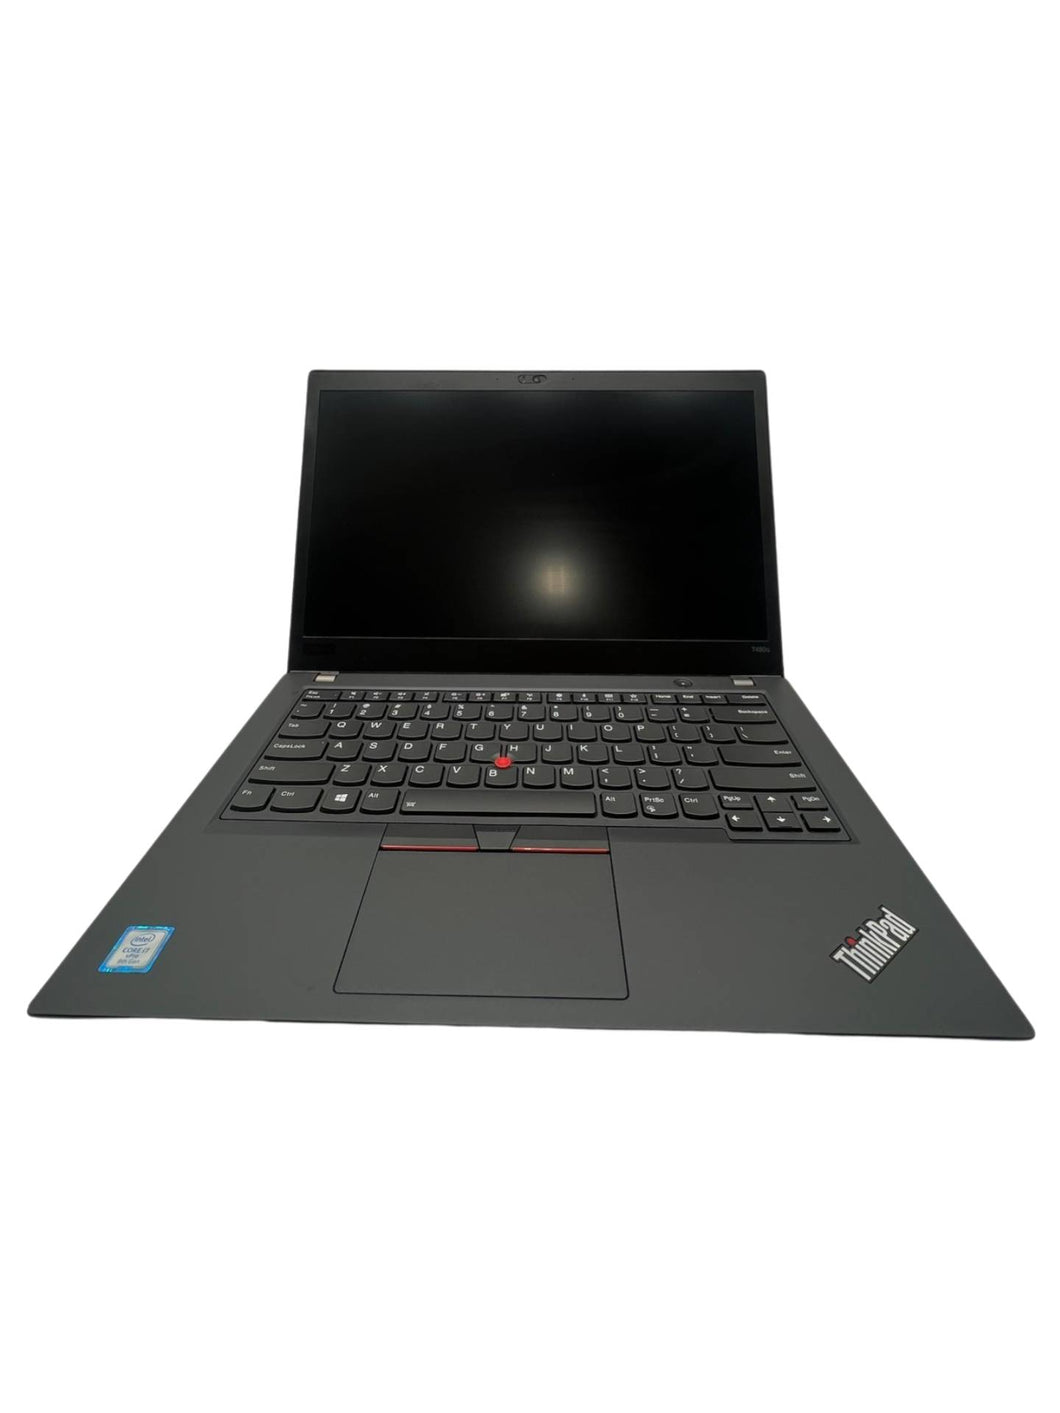 Lenovo ThinkPad X1 Carbon 4th Gen/i7-6600U/8GB RAM/256GB SSD/Windows 10